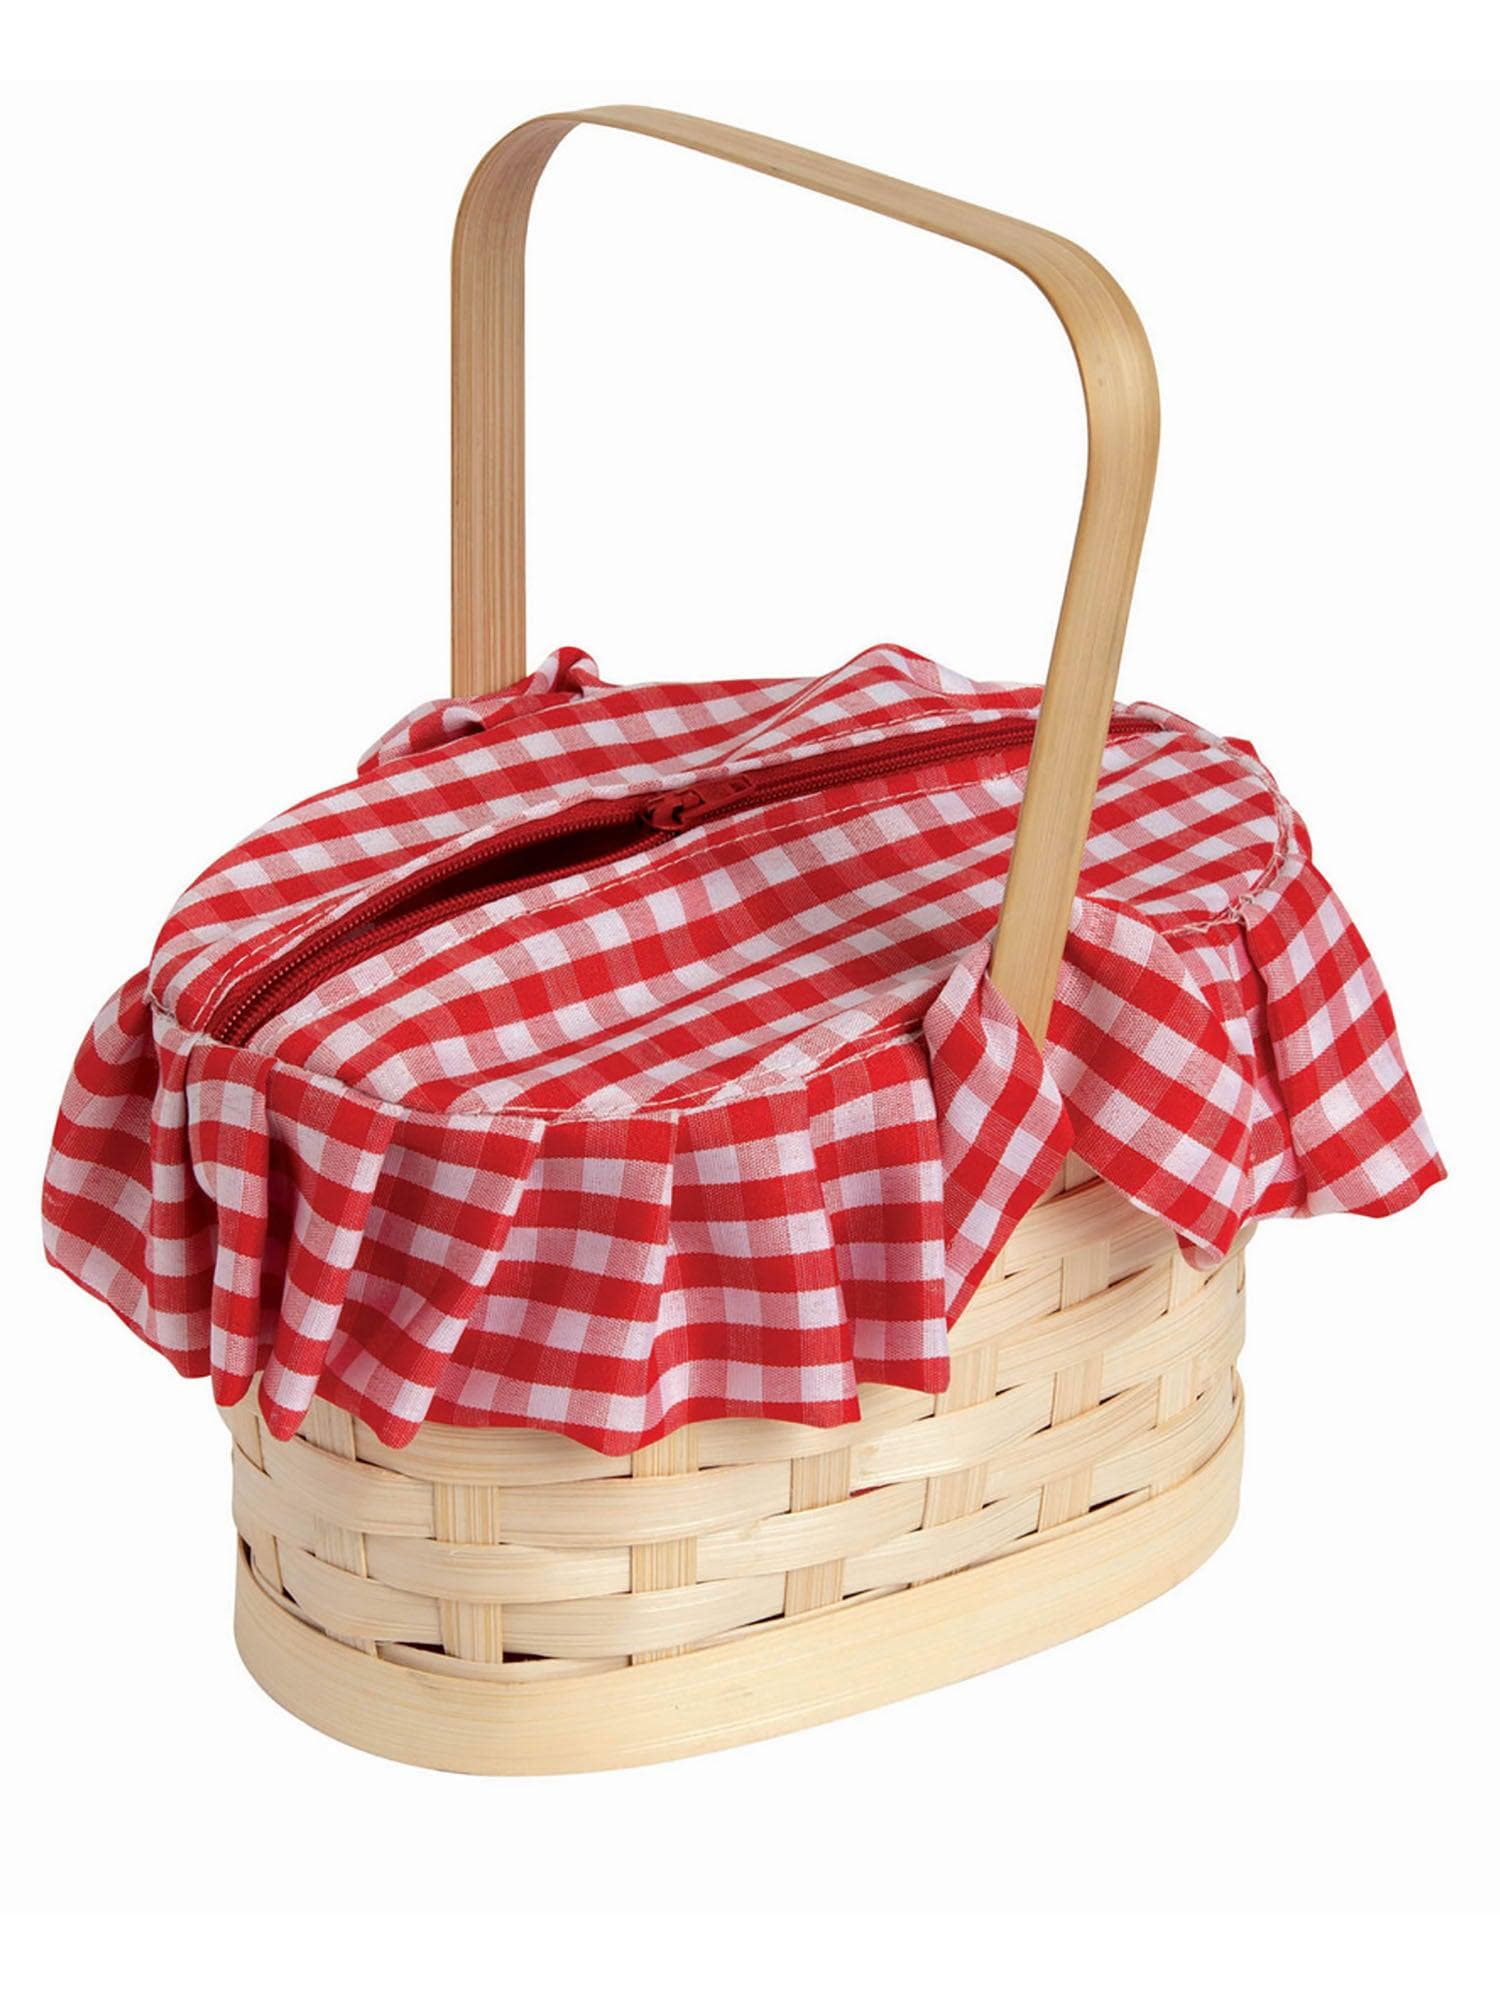 Woven Picnic Basket - costumes.com